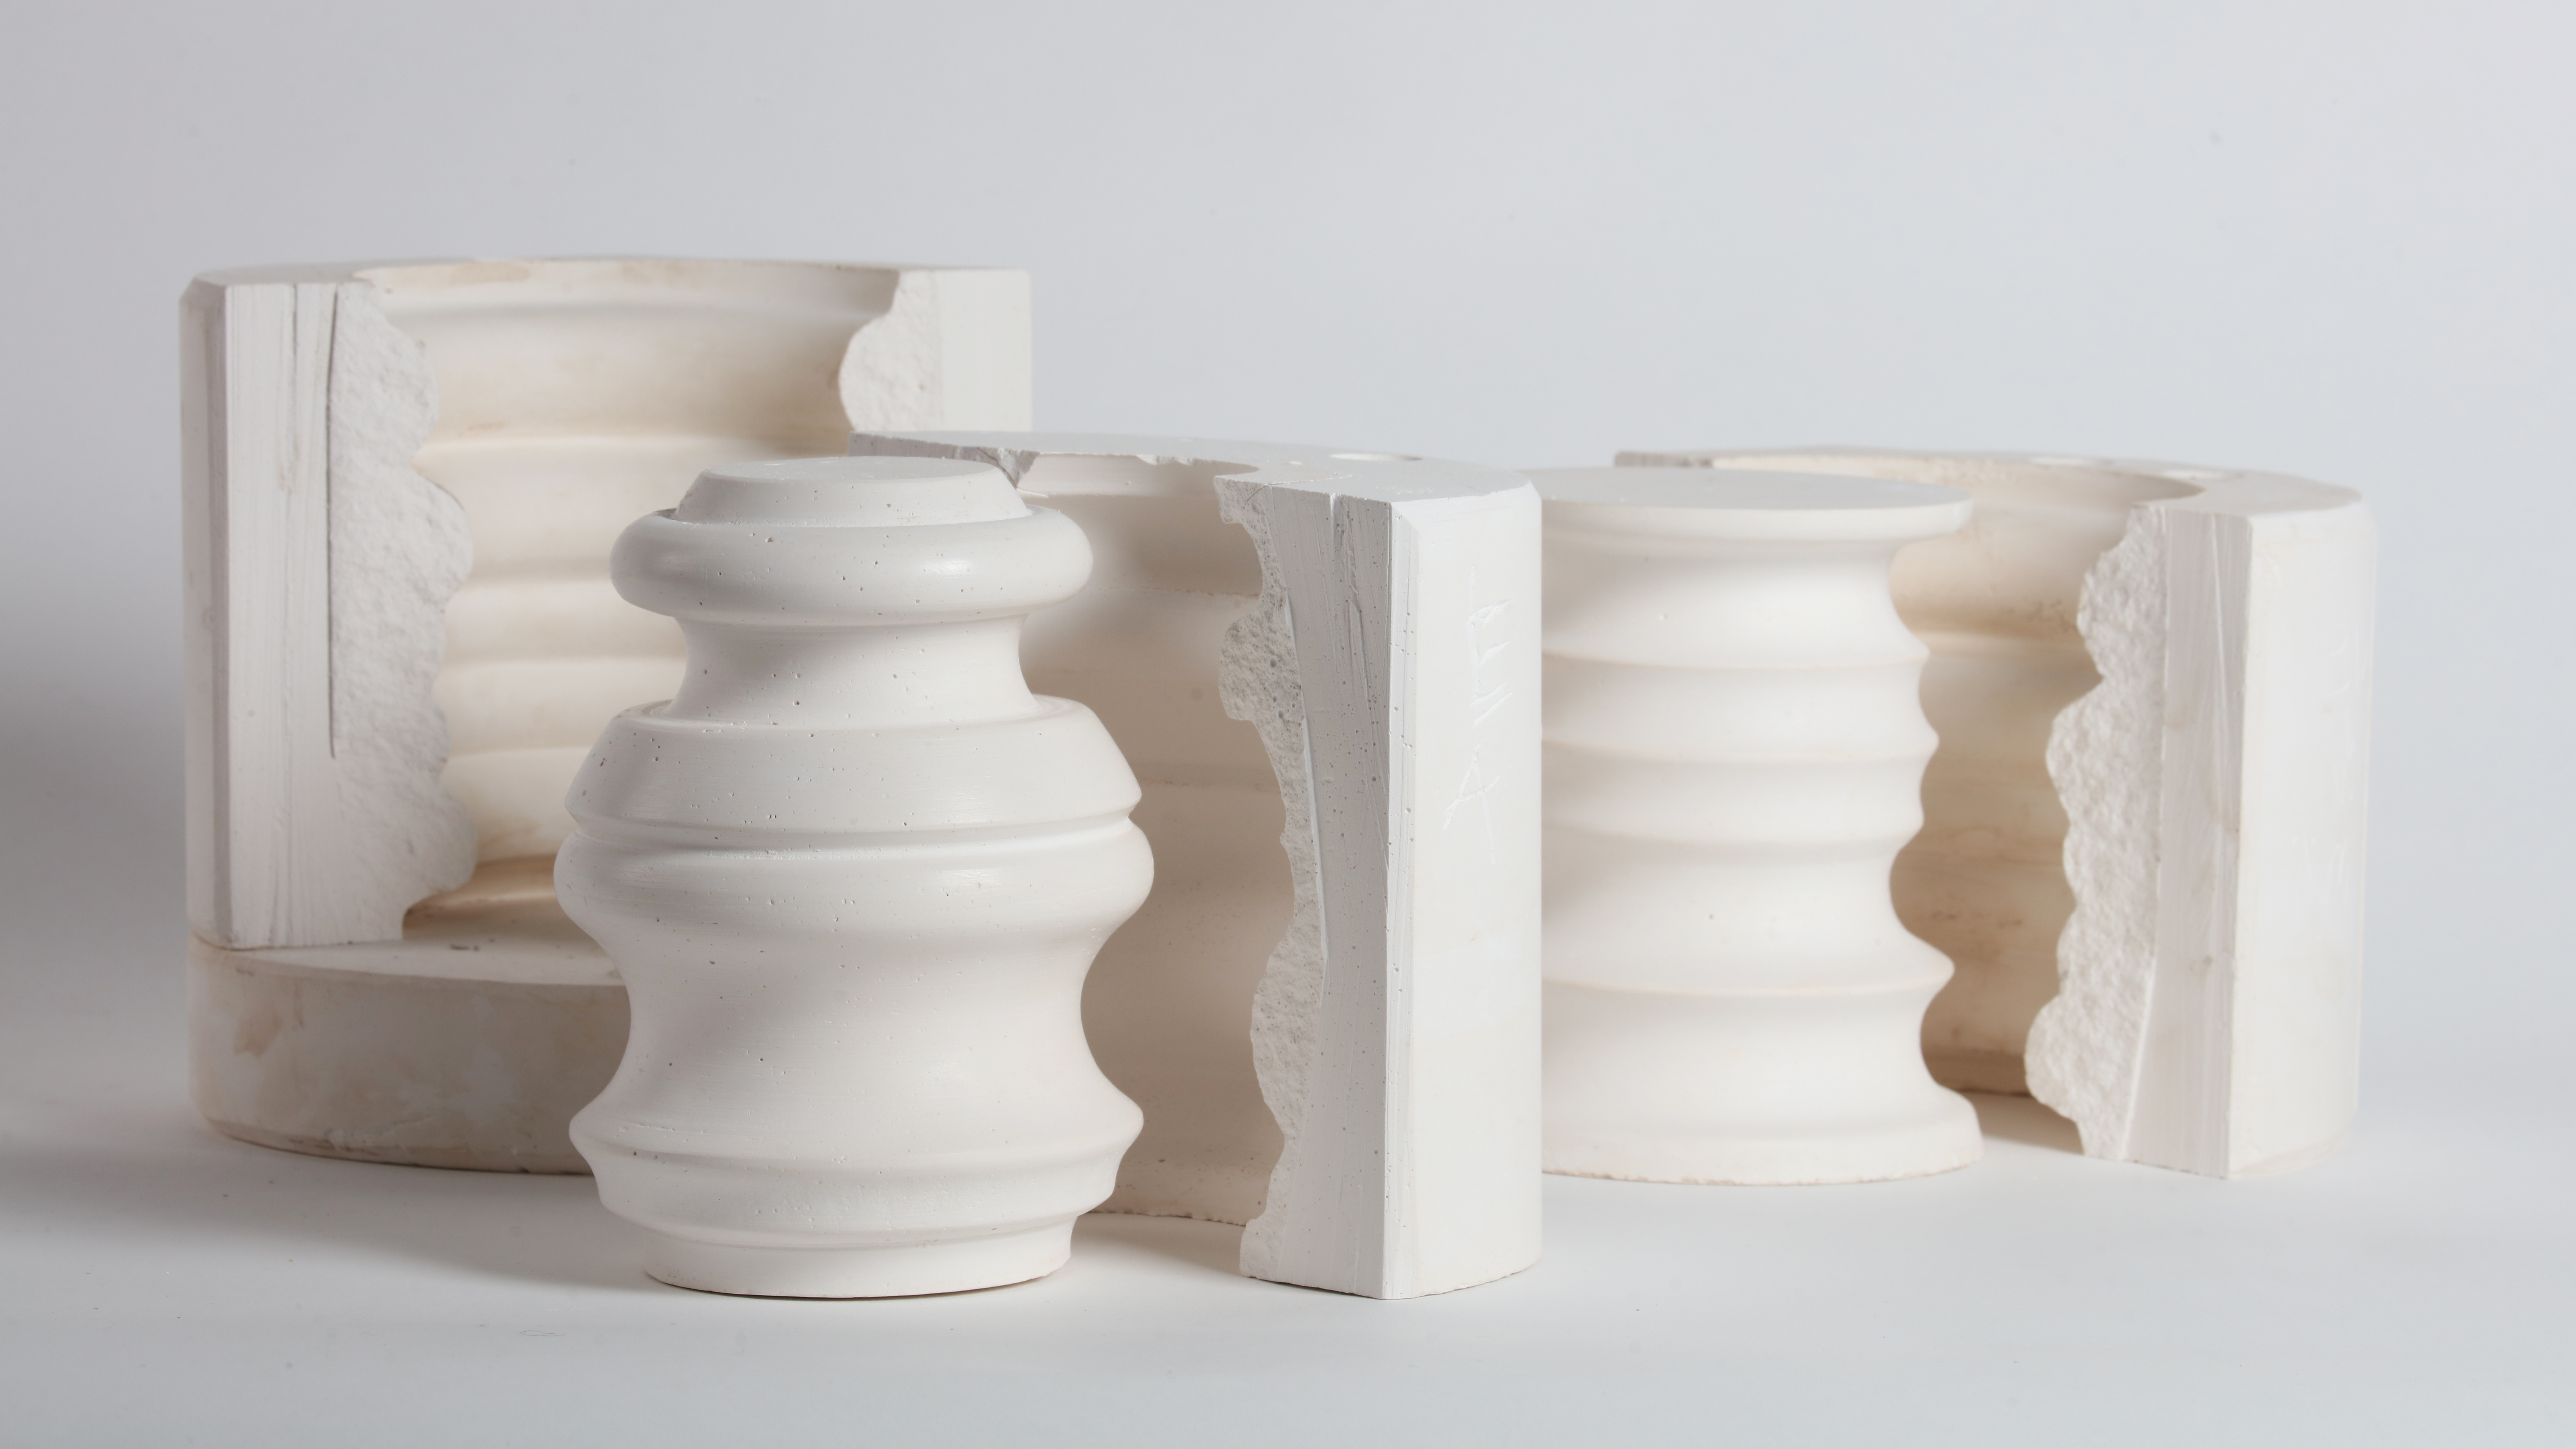 Sculptural ceramic work by BA Product Furniture Design student.